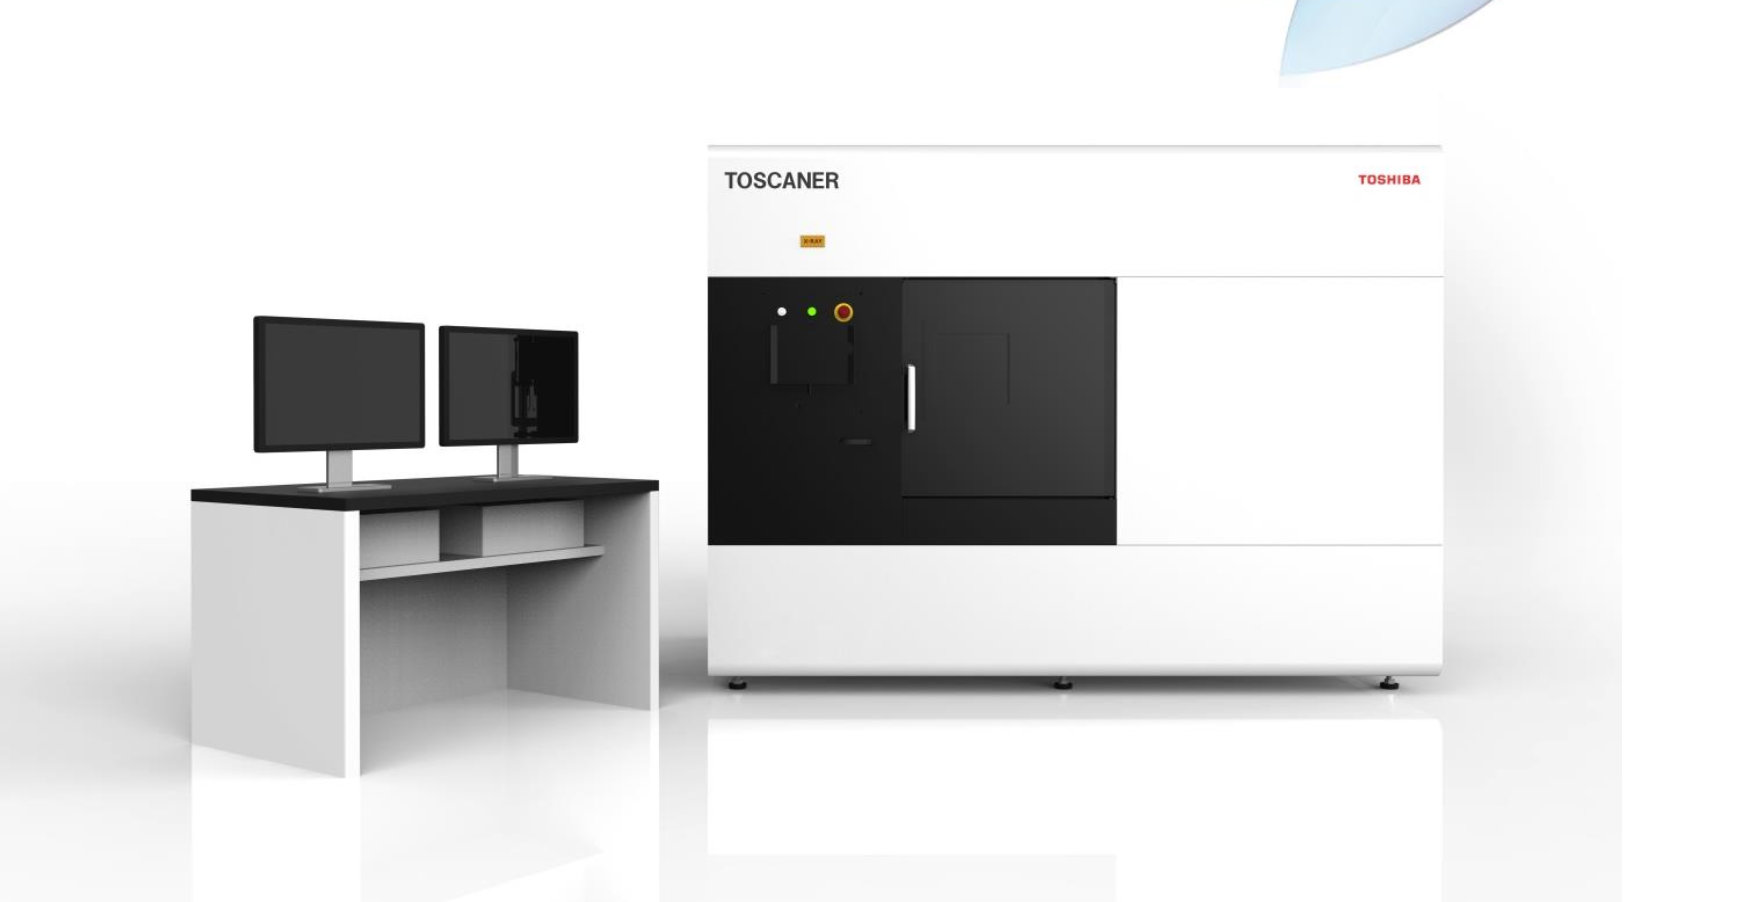 东芝产业用CT扫描装置 TOSCANER-30000μFD-ZII  